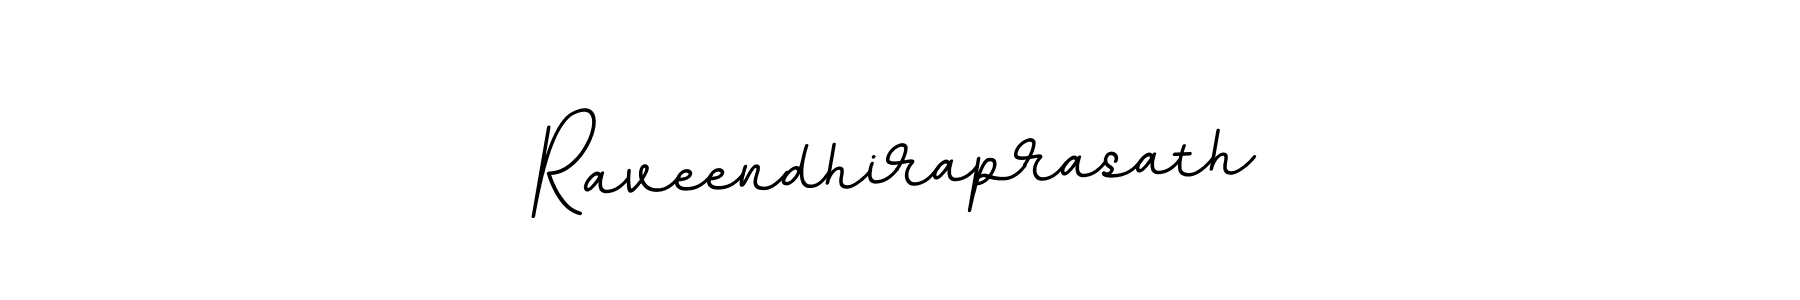 How to Draw Raveendhiraprasath signature style? BallpointsItalic-DORy9 is a latest design signature styles for name Raveendhiraprasath. Raveendhiraprasath signature style 11 images and pictures png